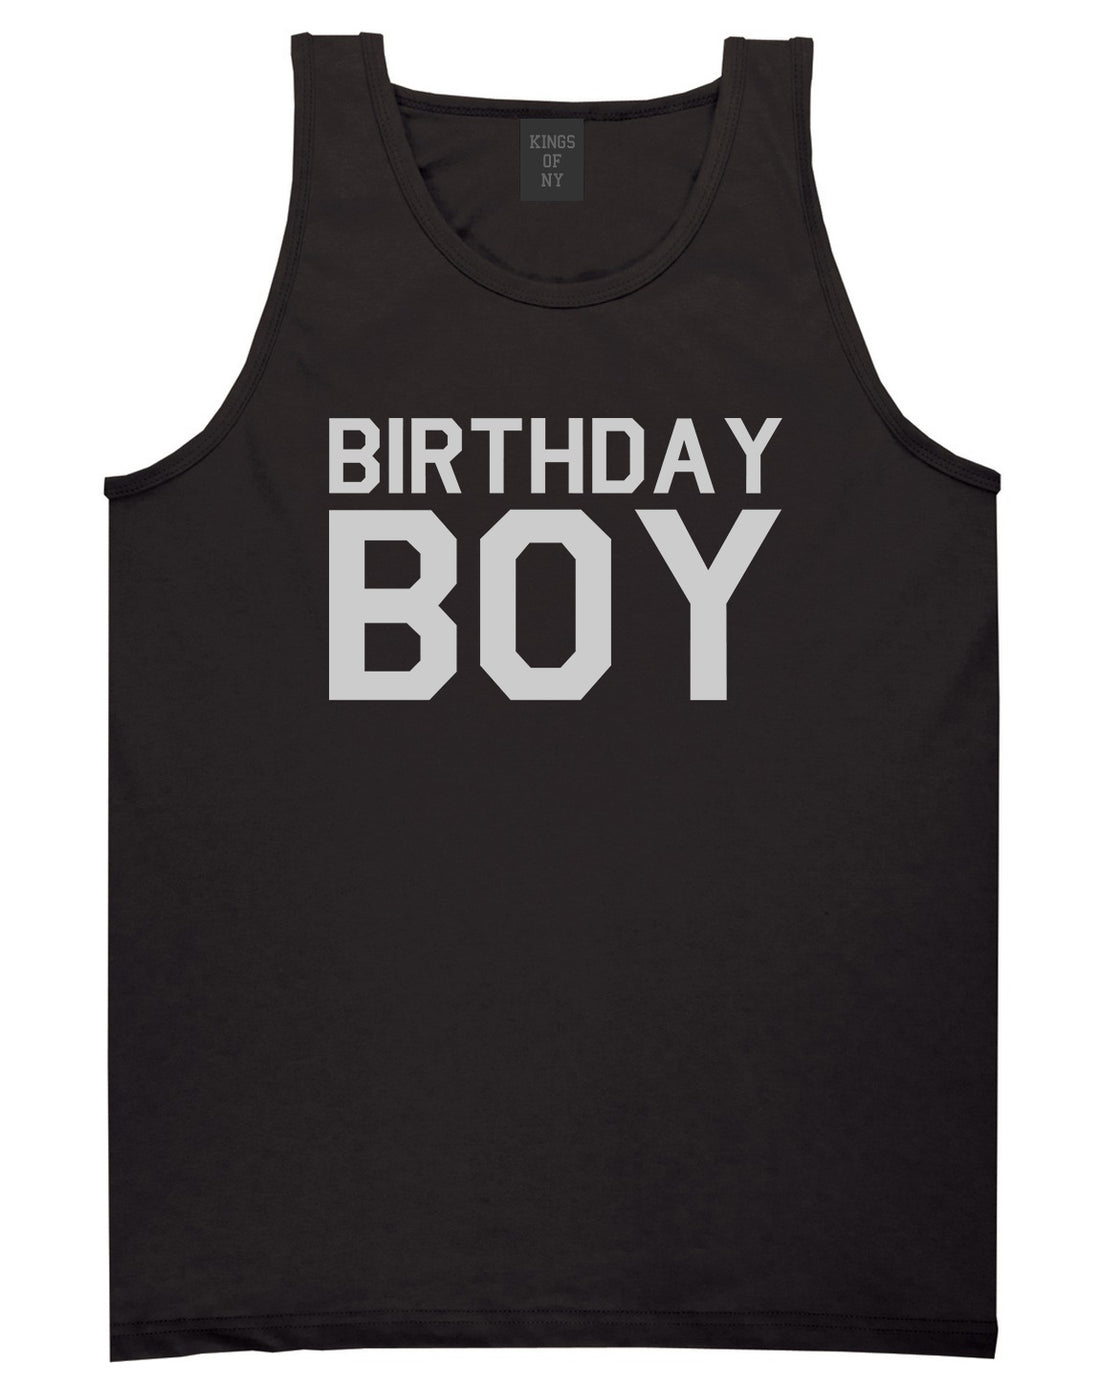 Birthday Boy Black Tank Top Shirt by Kings Of NY